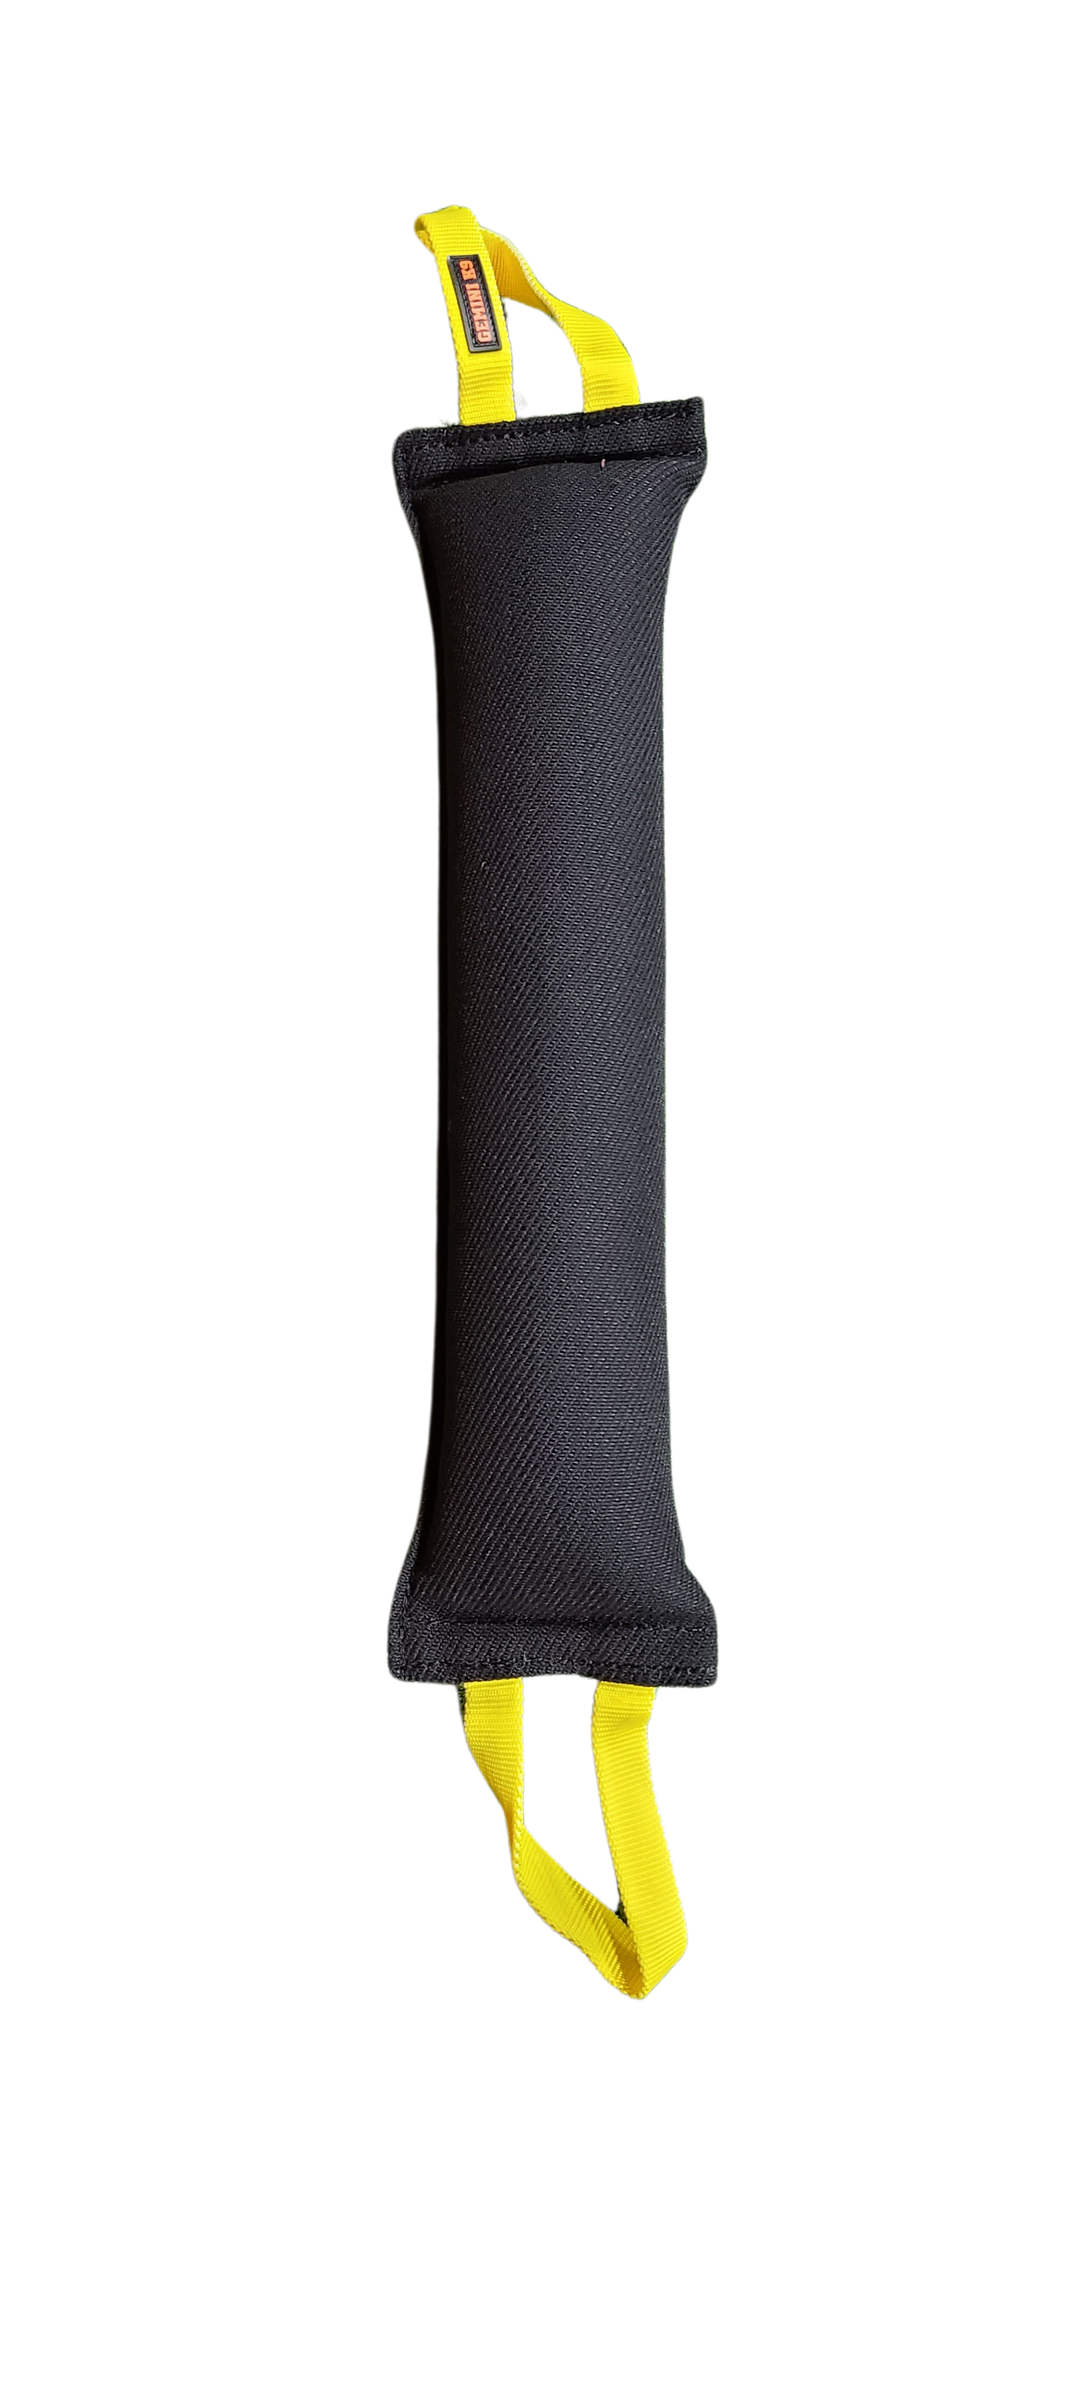 X-Large Bite Suit material Tug